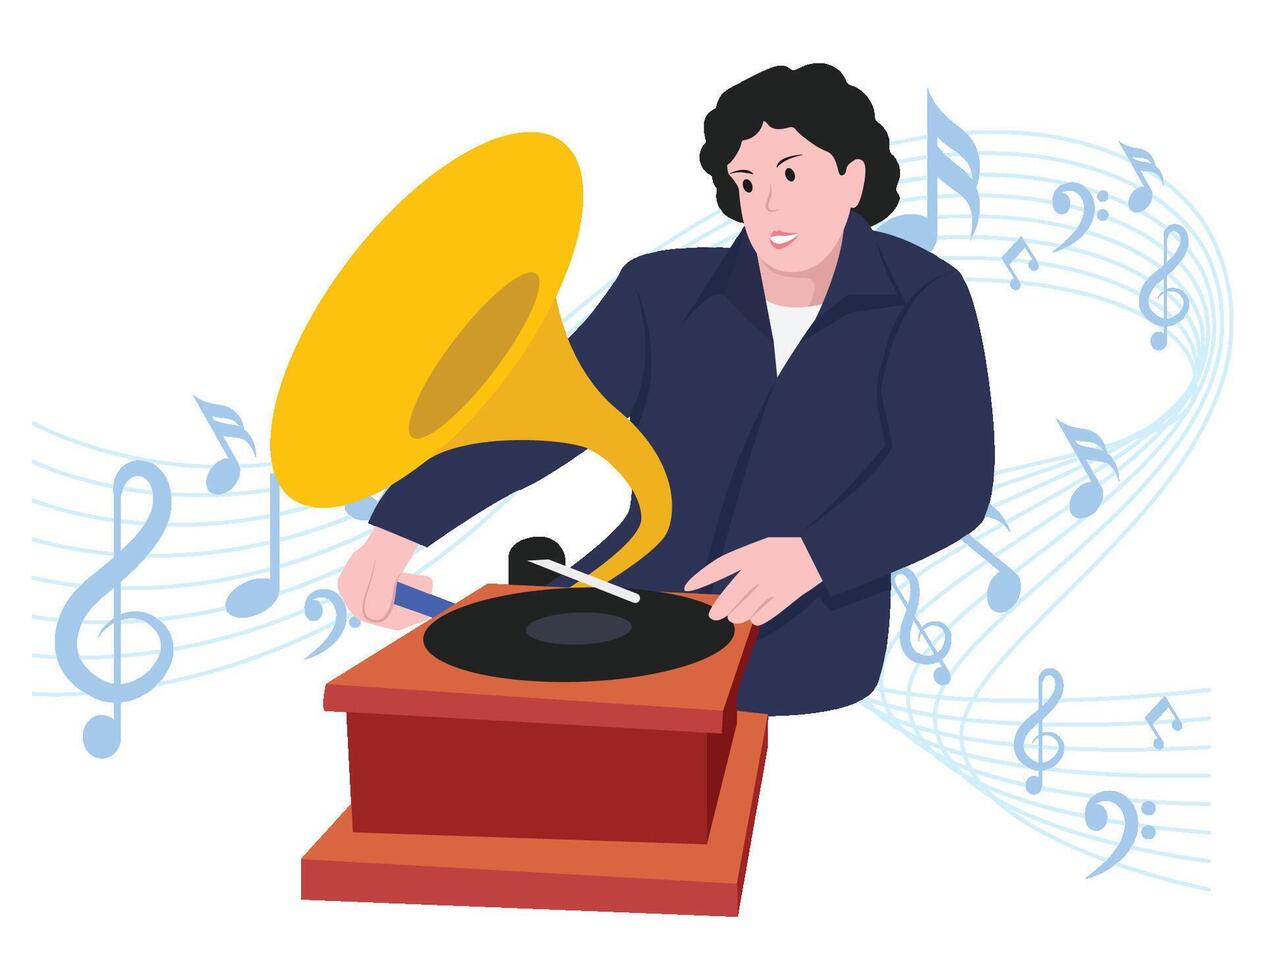 spielen Musik- auf Grammophon - - Musical Felsen Band Illustration vektor